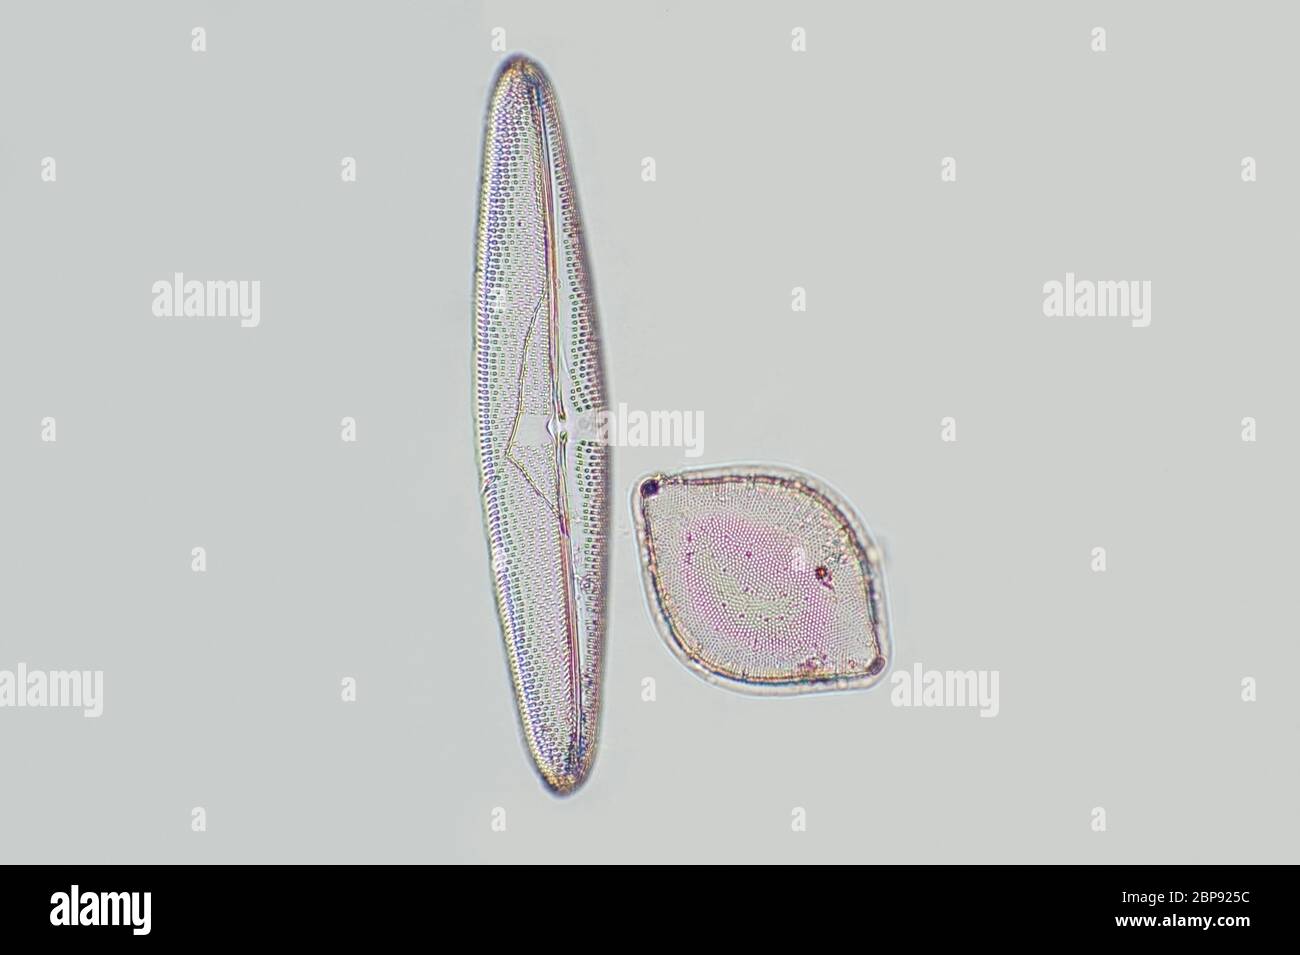 Diatom, microscope view Stock Photo